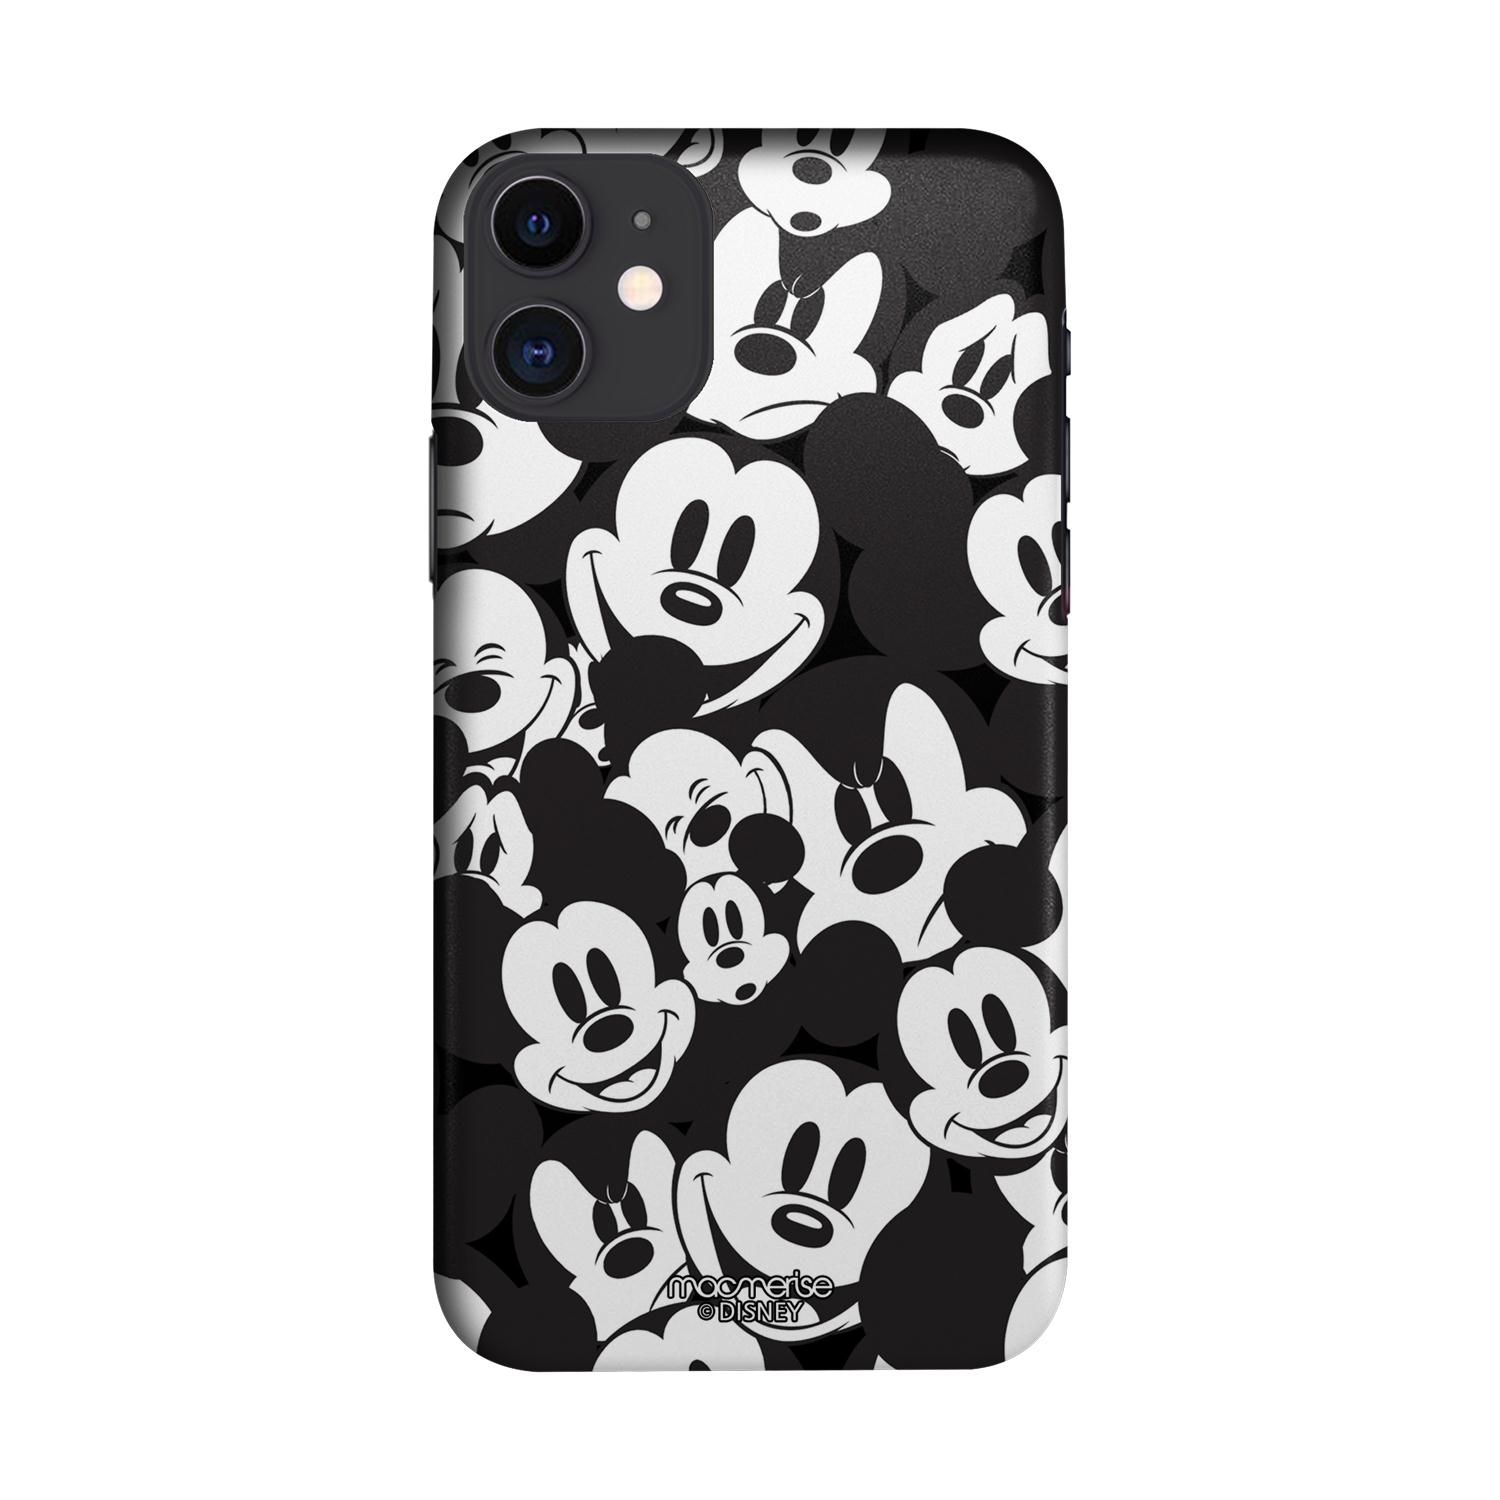 Buy Mickey Smileys - Sleek Phone Case for iPhone 11 Online